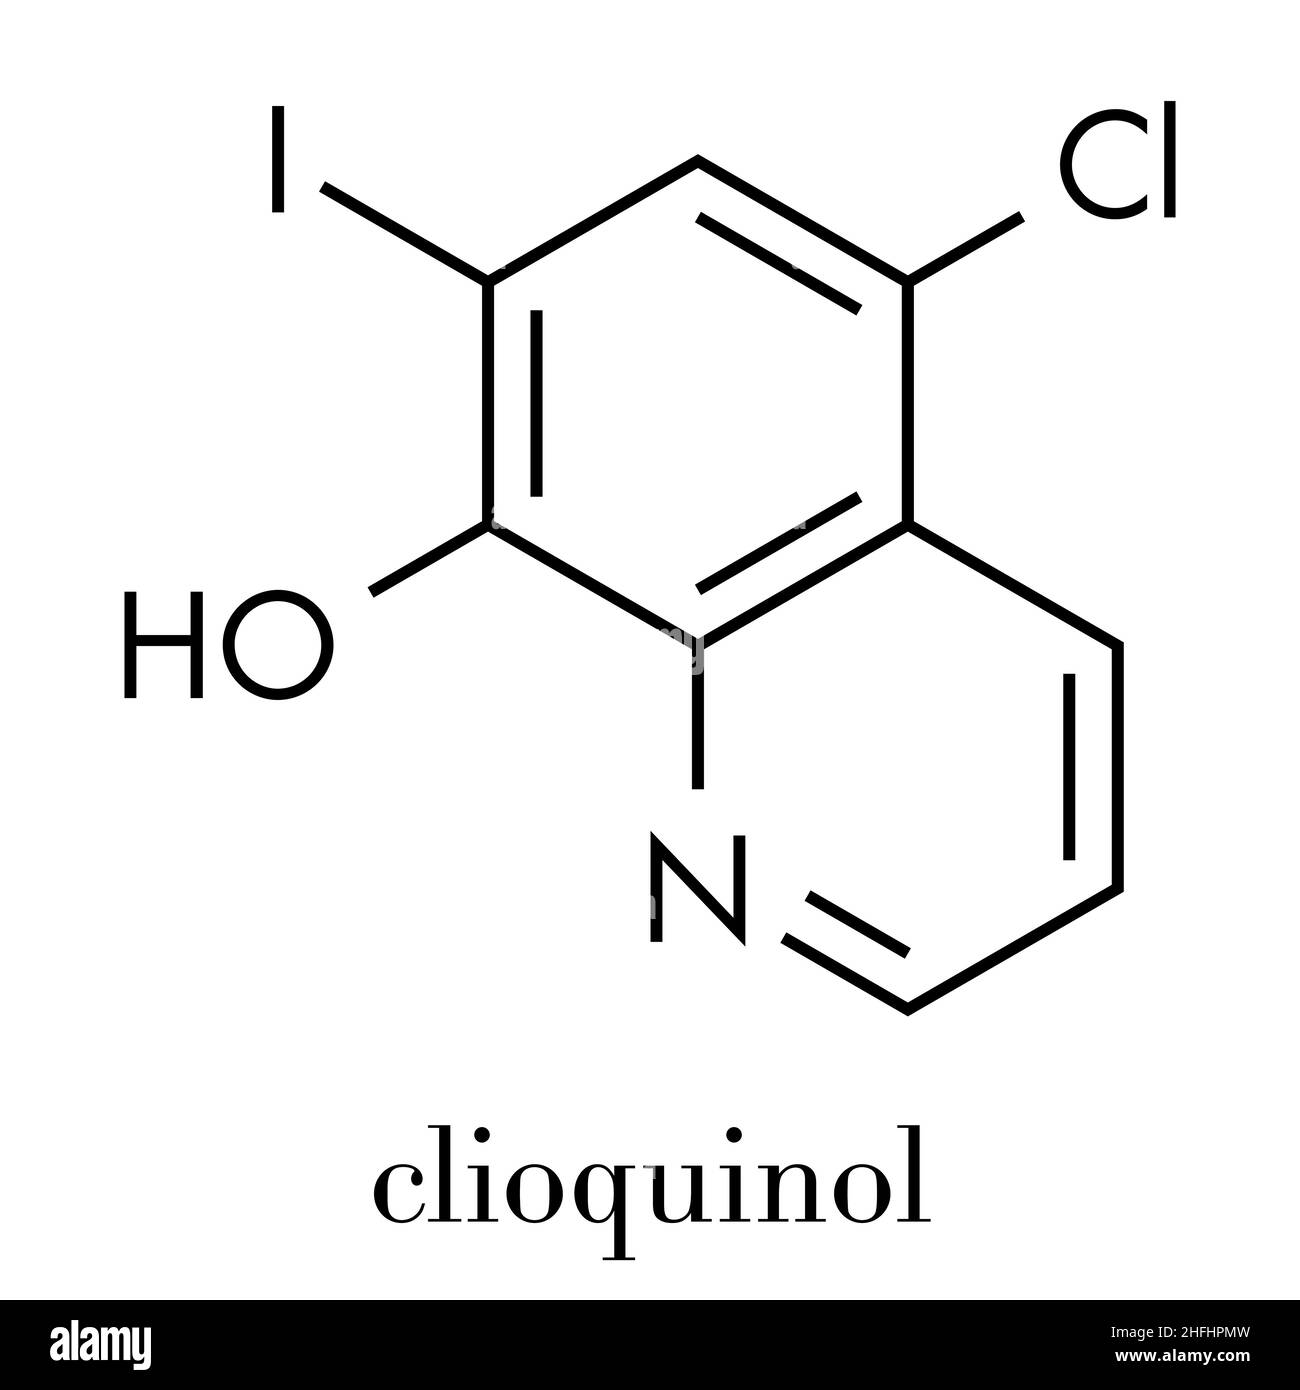 Clioquinol (iodochlorhydroxyquin) antifungal and antiprotozoal drug molecule. Skeletal formula. Stock Vector